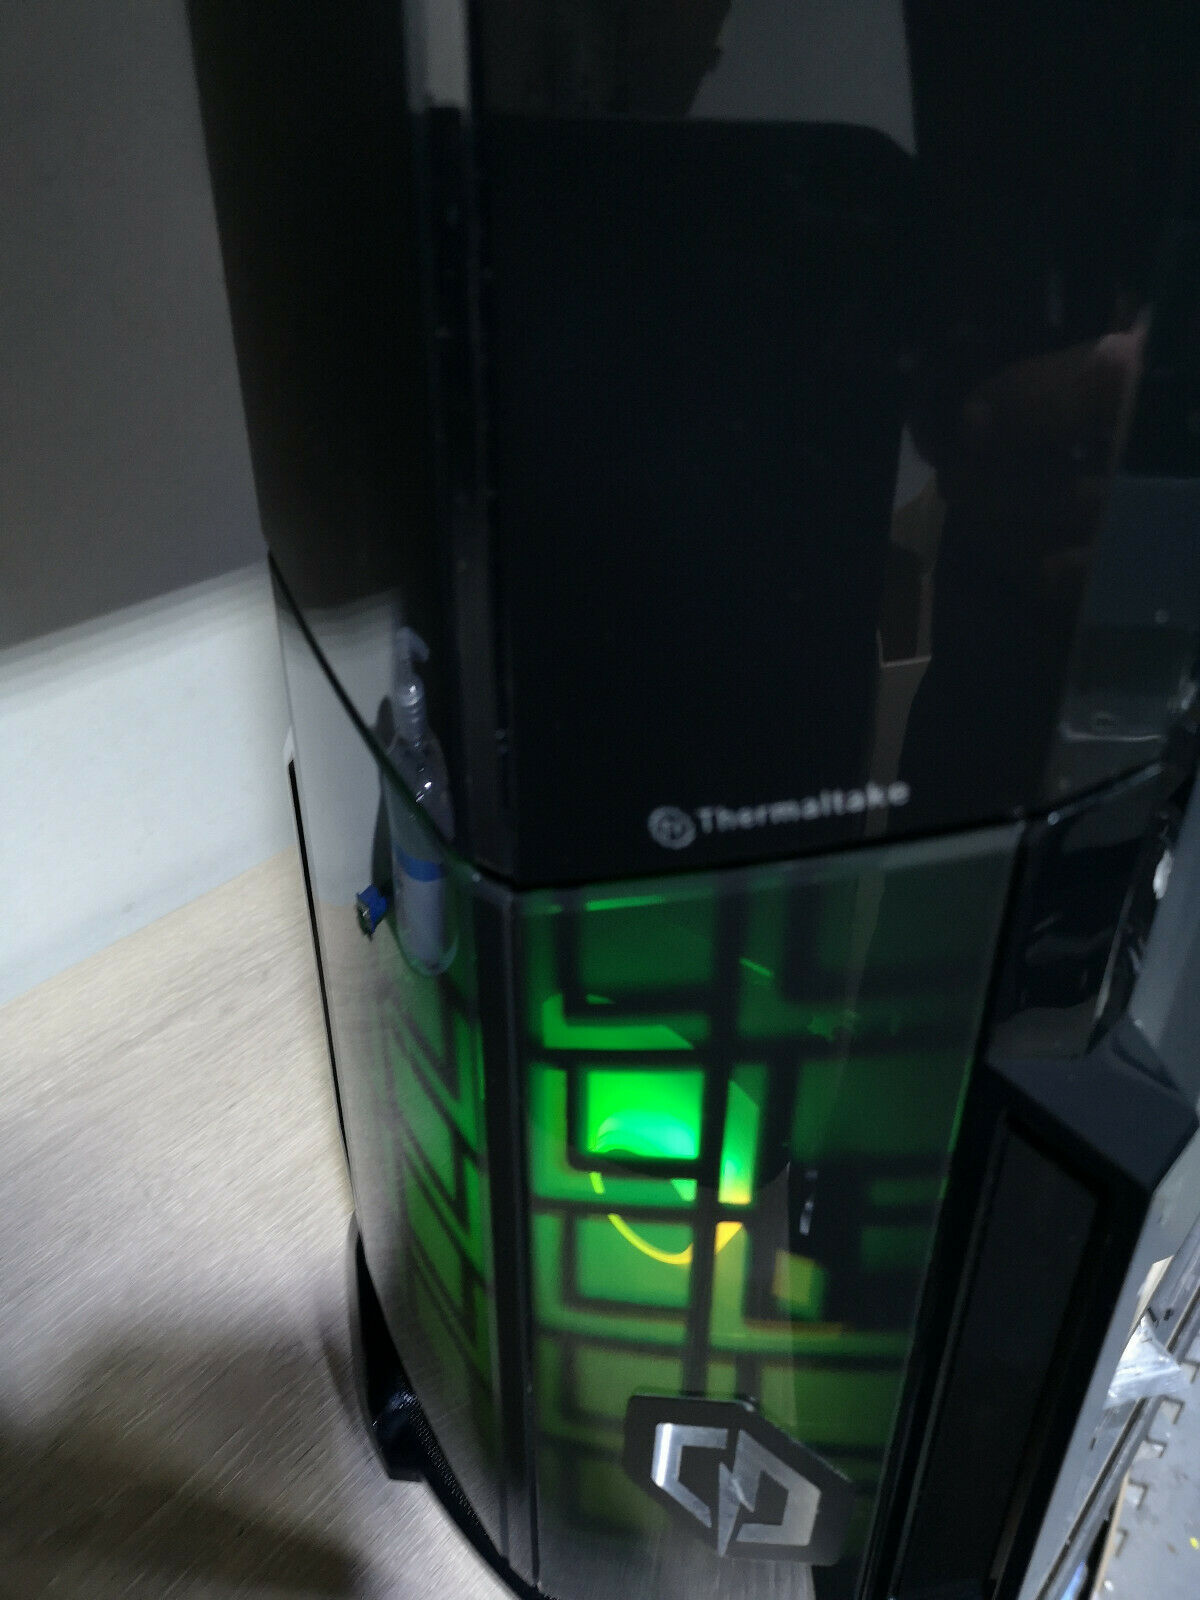 Refurbished Custom Desktop Tower PC